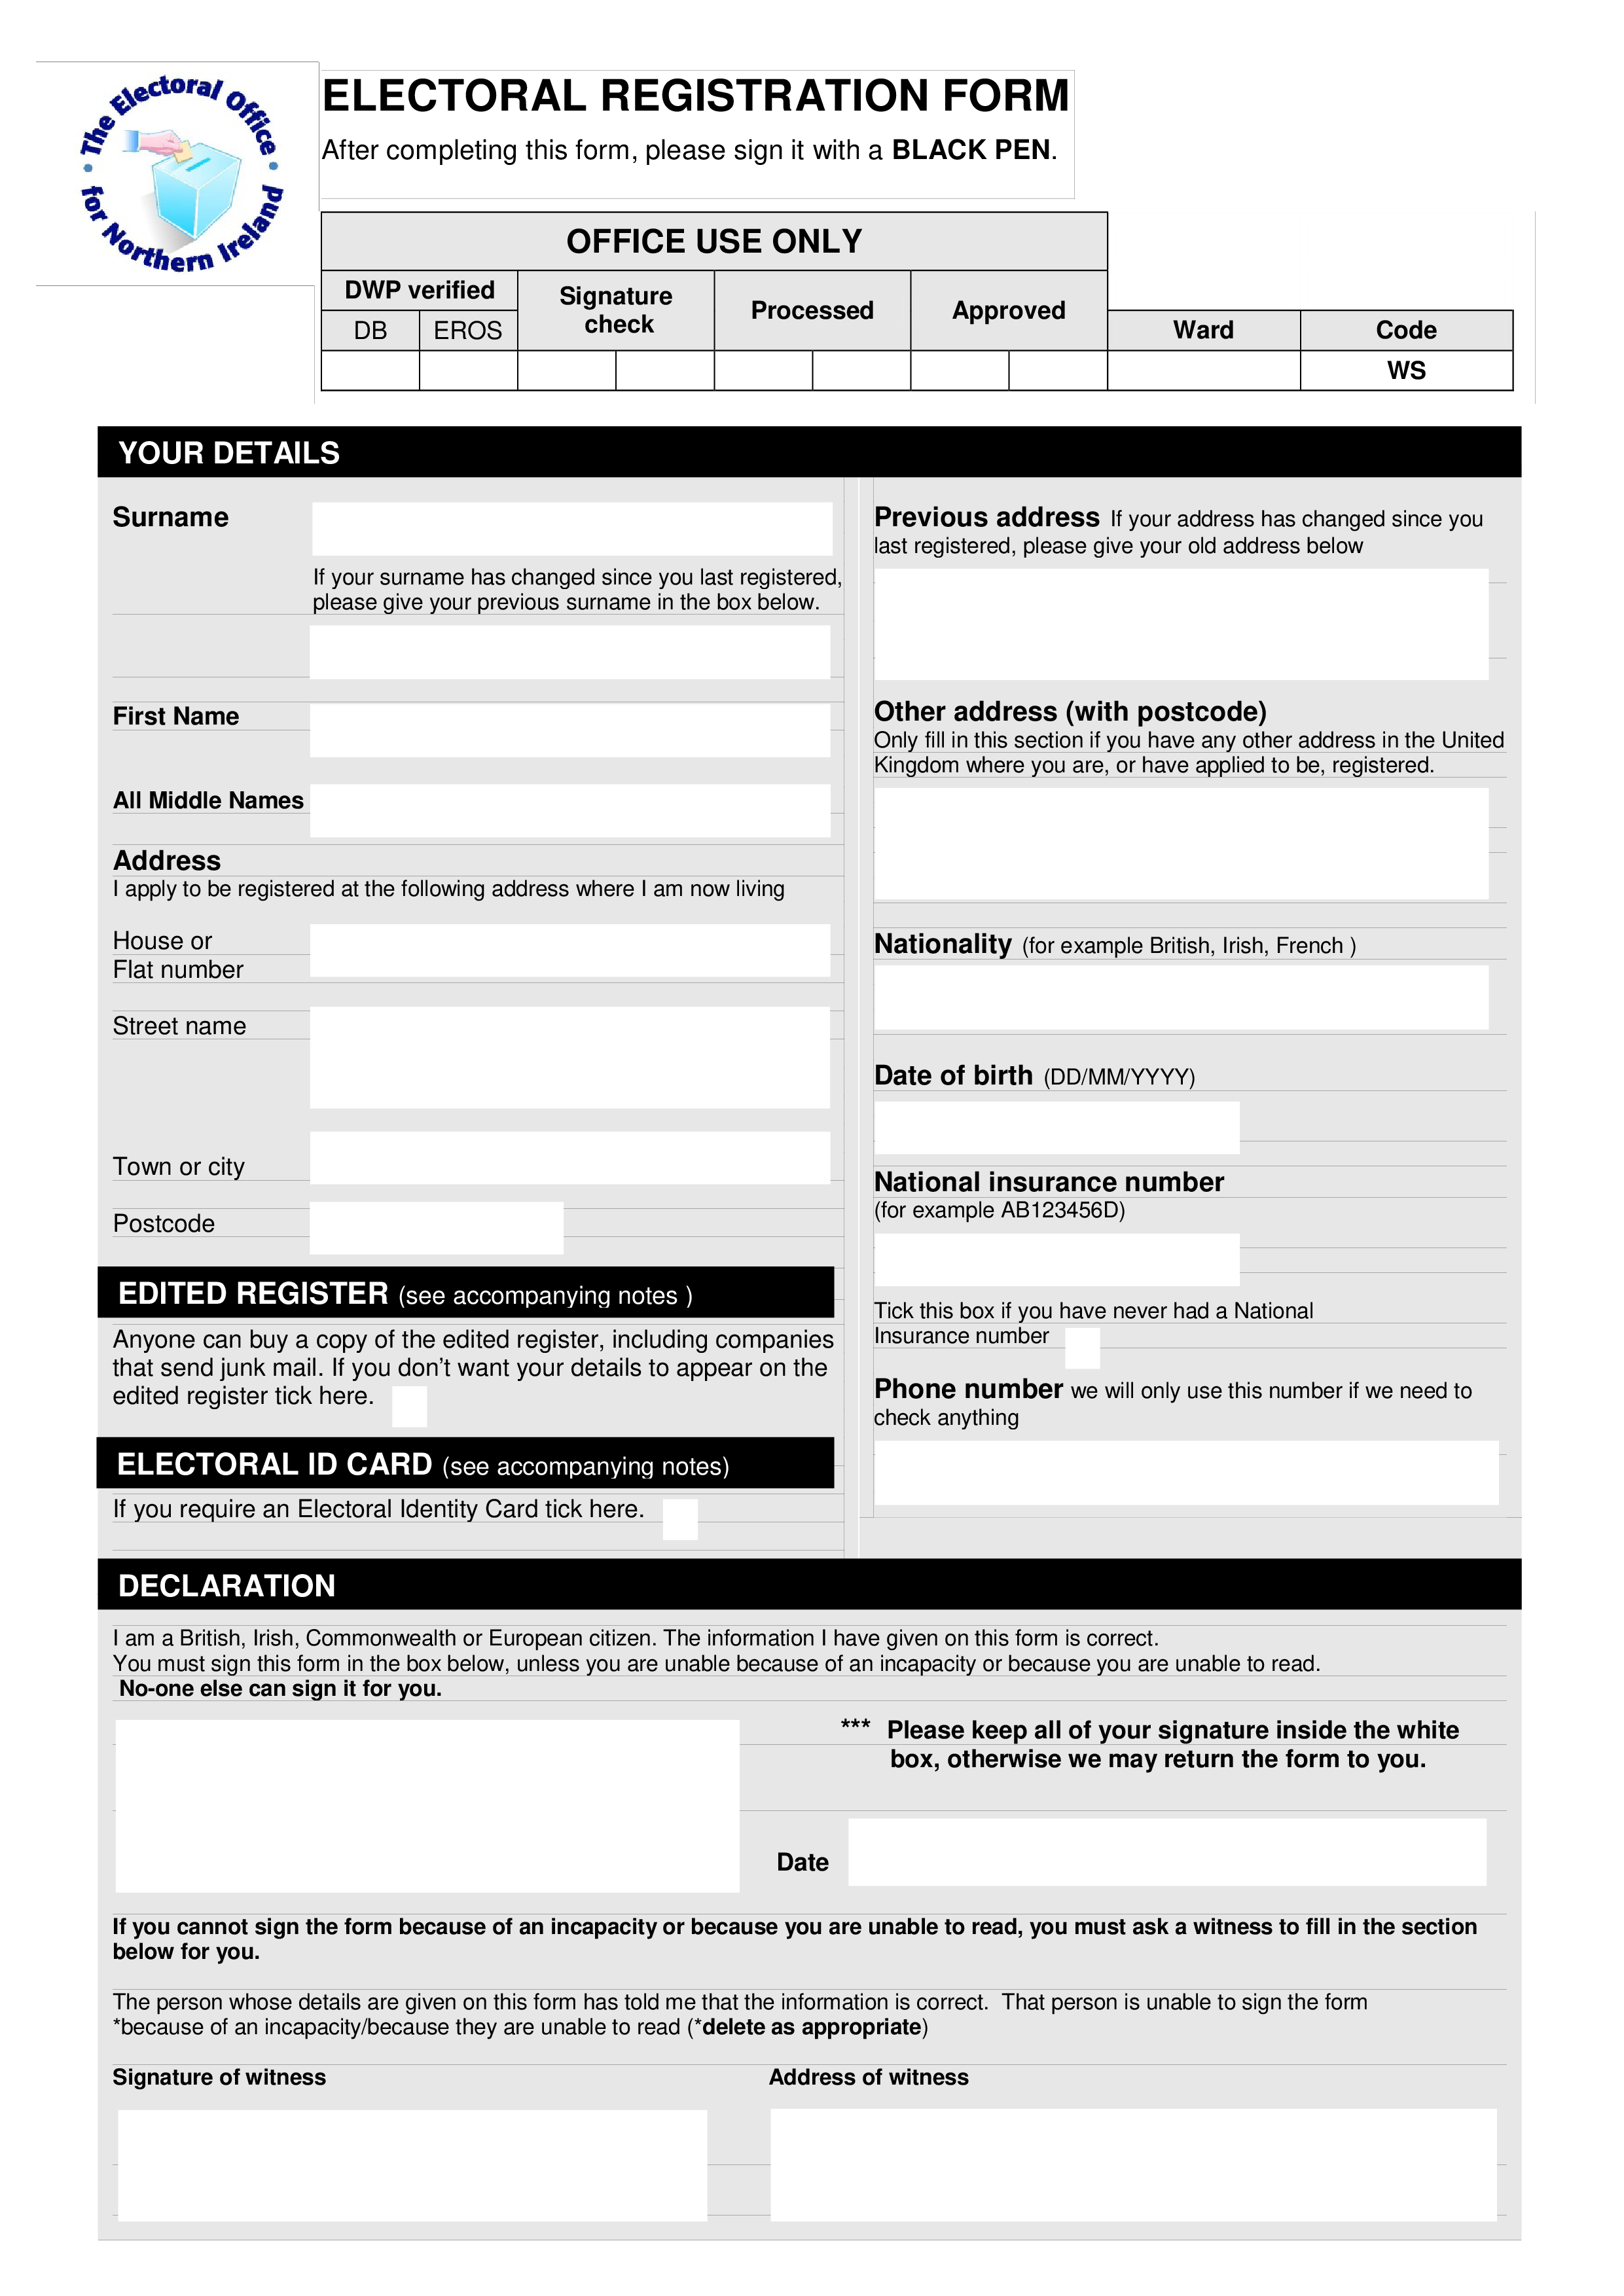 Electoral Registration Form Printable main image